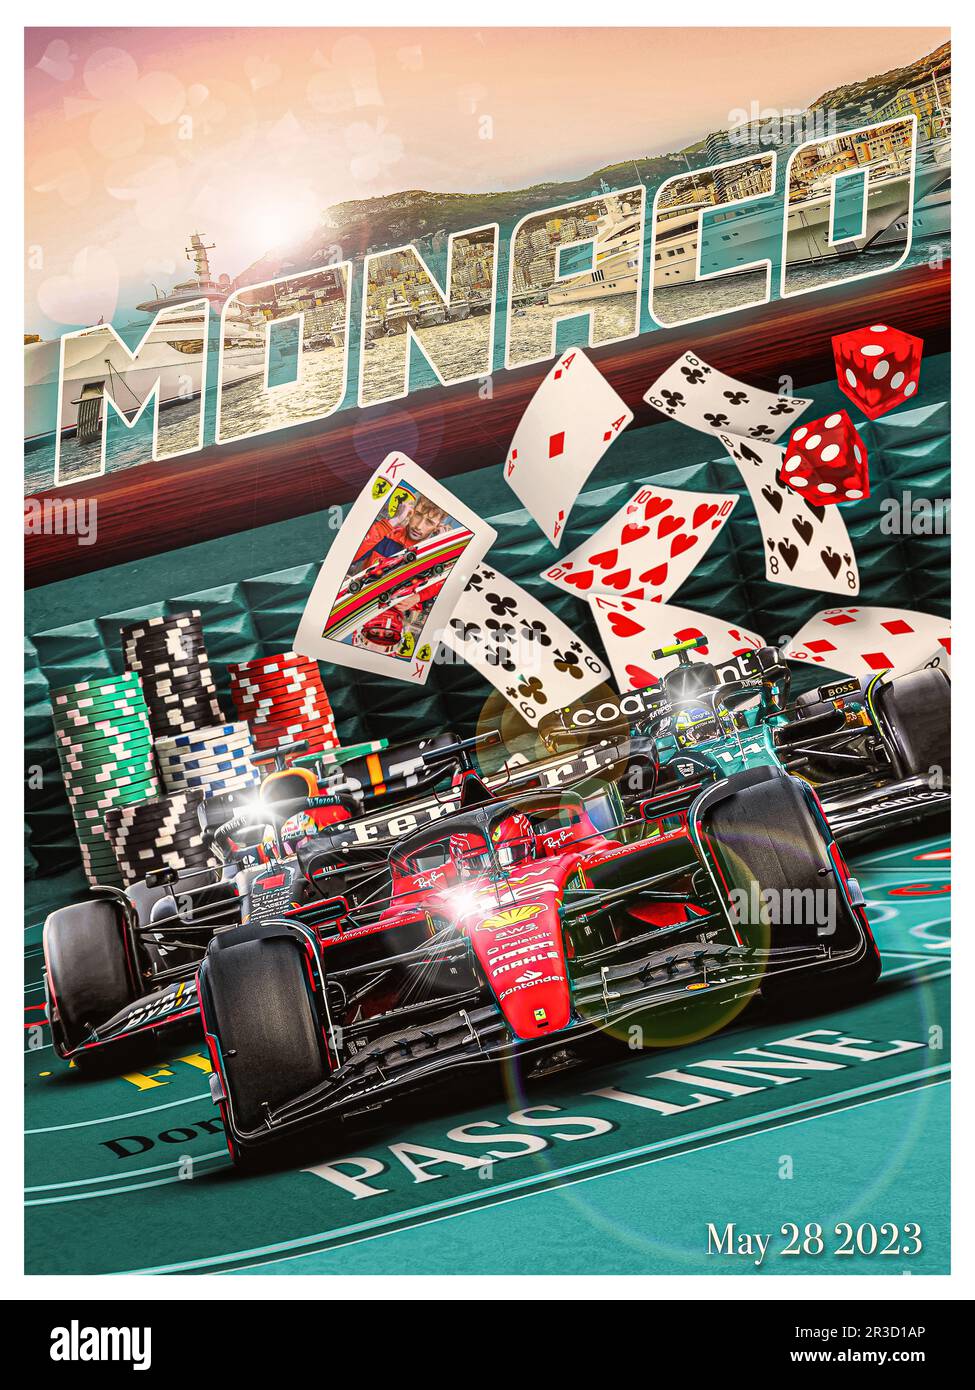 Affiche ancienne – Formula 1, Grand Prix de Monaco – Galerie 1 2 3